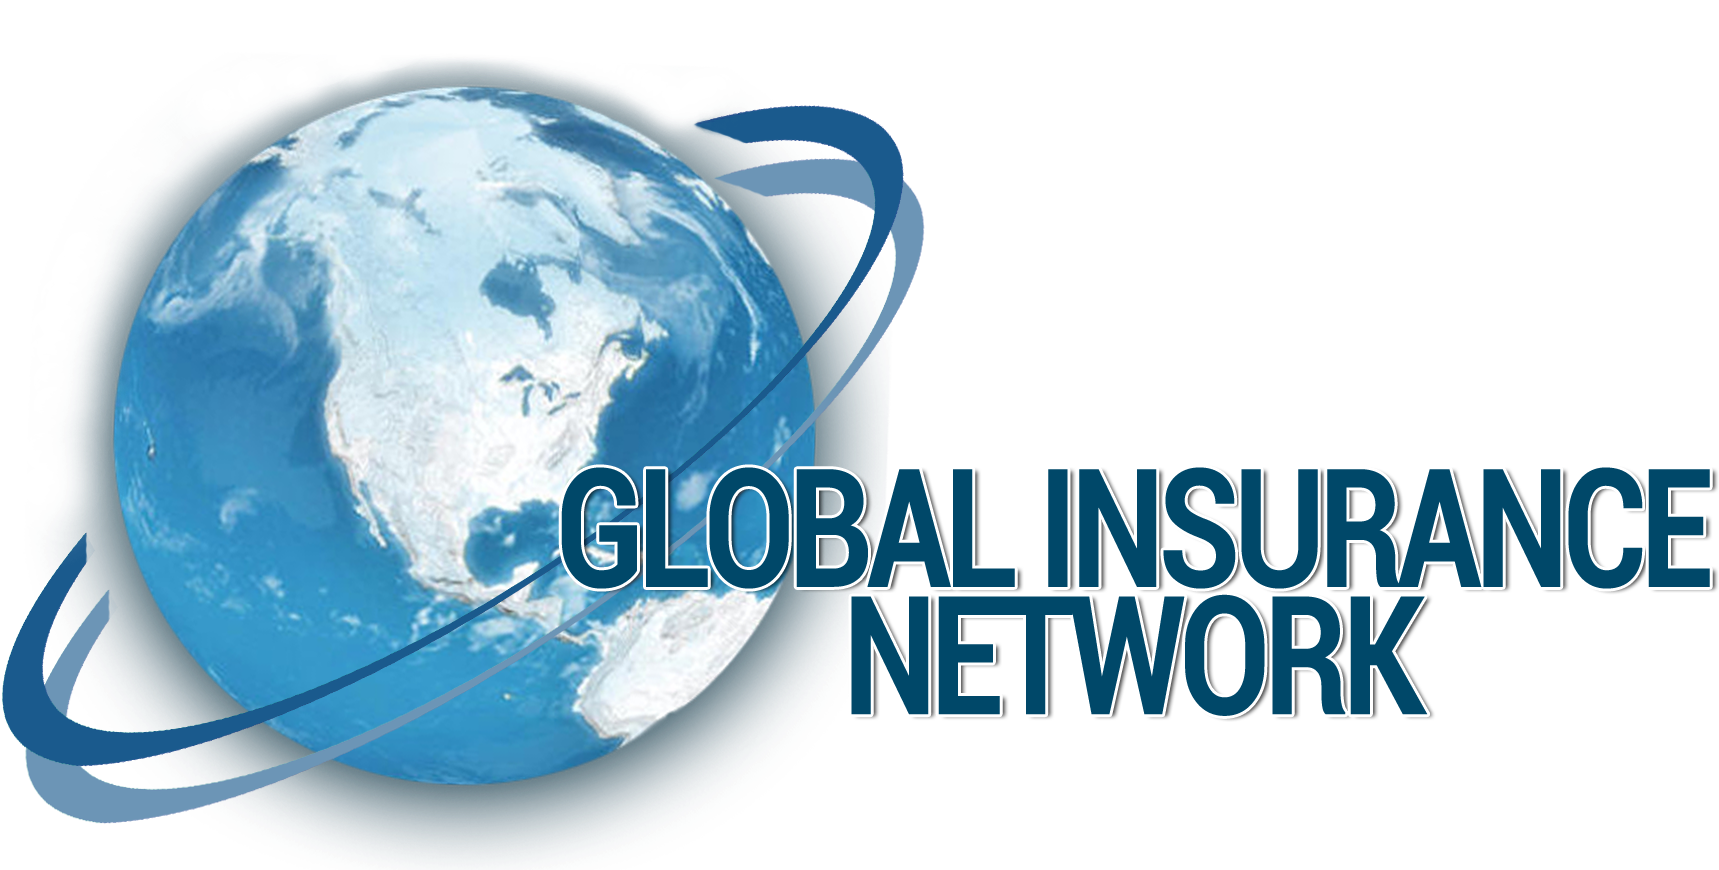 Global Insurance Network Logo PNG image